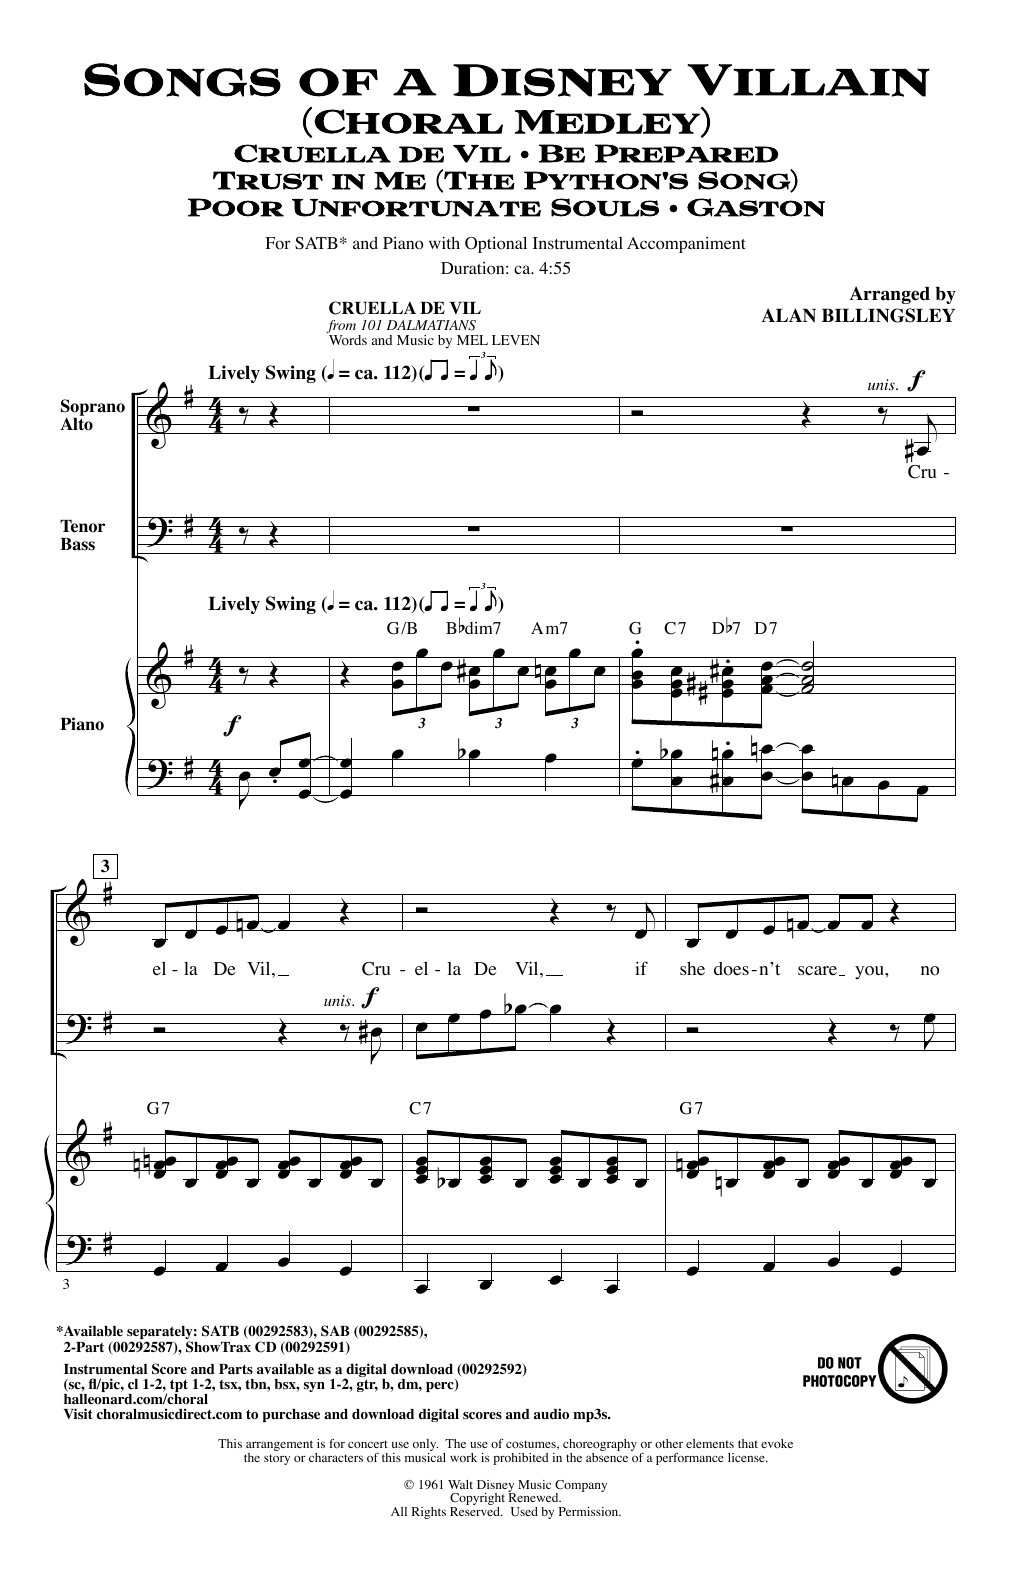 Alan Billingsley Songs Of A Disney Villain (Choral Medley) Sheet Music Notes & Chords for SATB Choir - Download or Print PDF